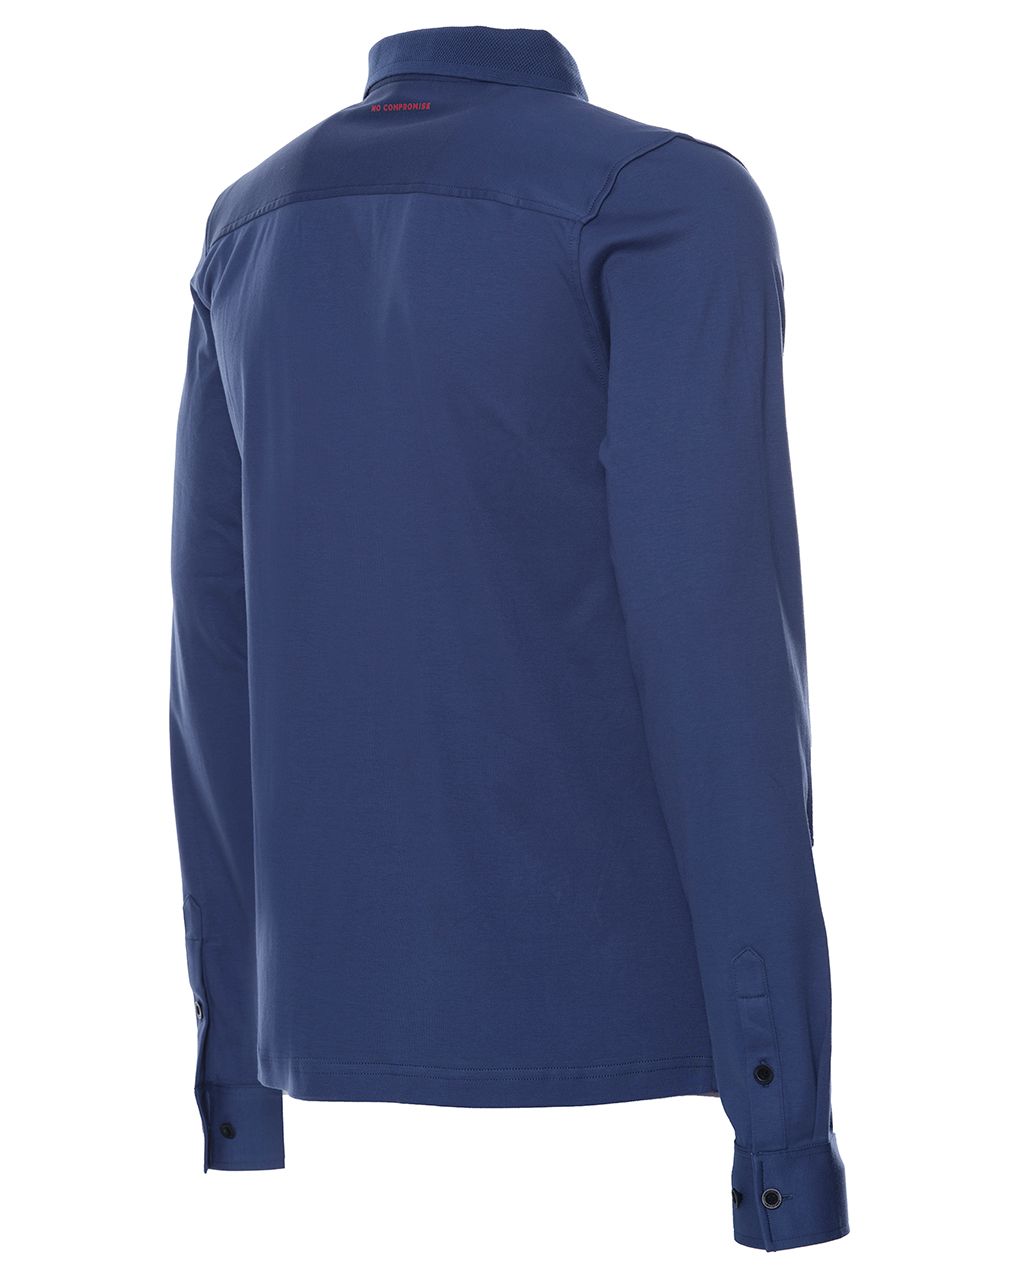 Donkervoort Casual Overhemd LM Blue Marine 071768-003-L